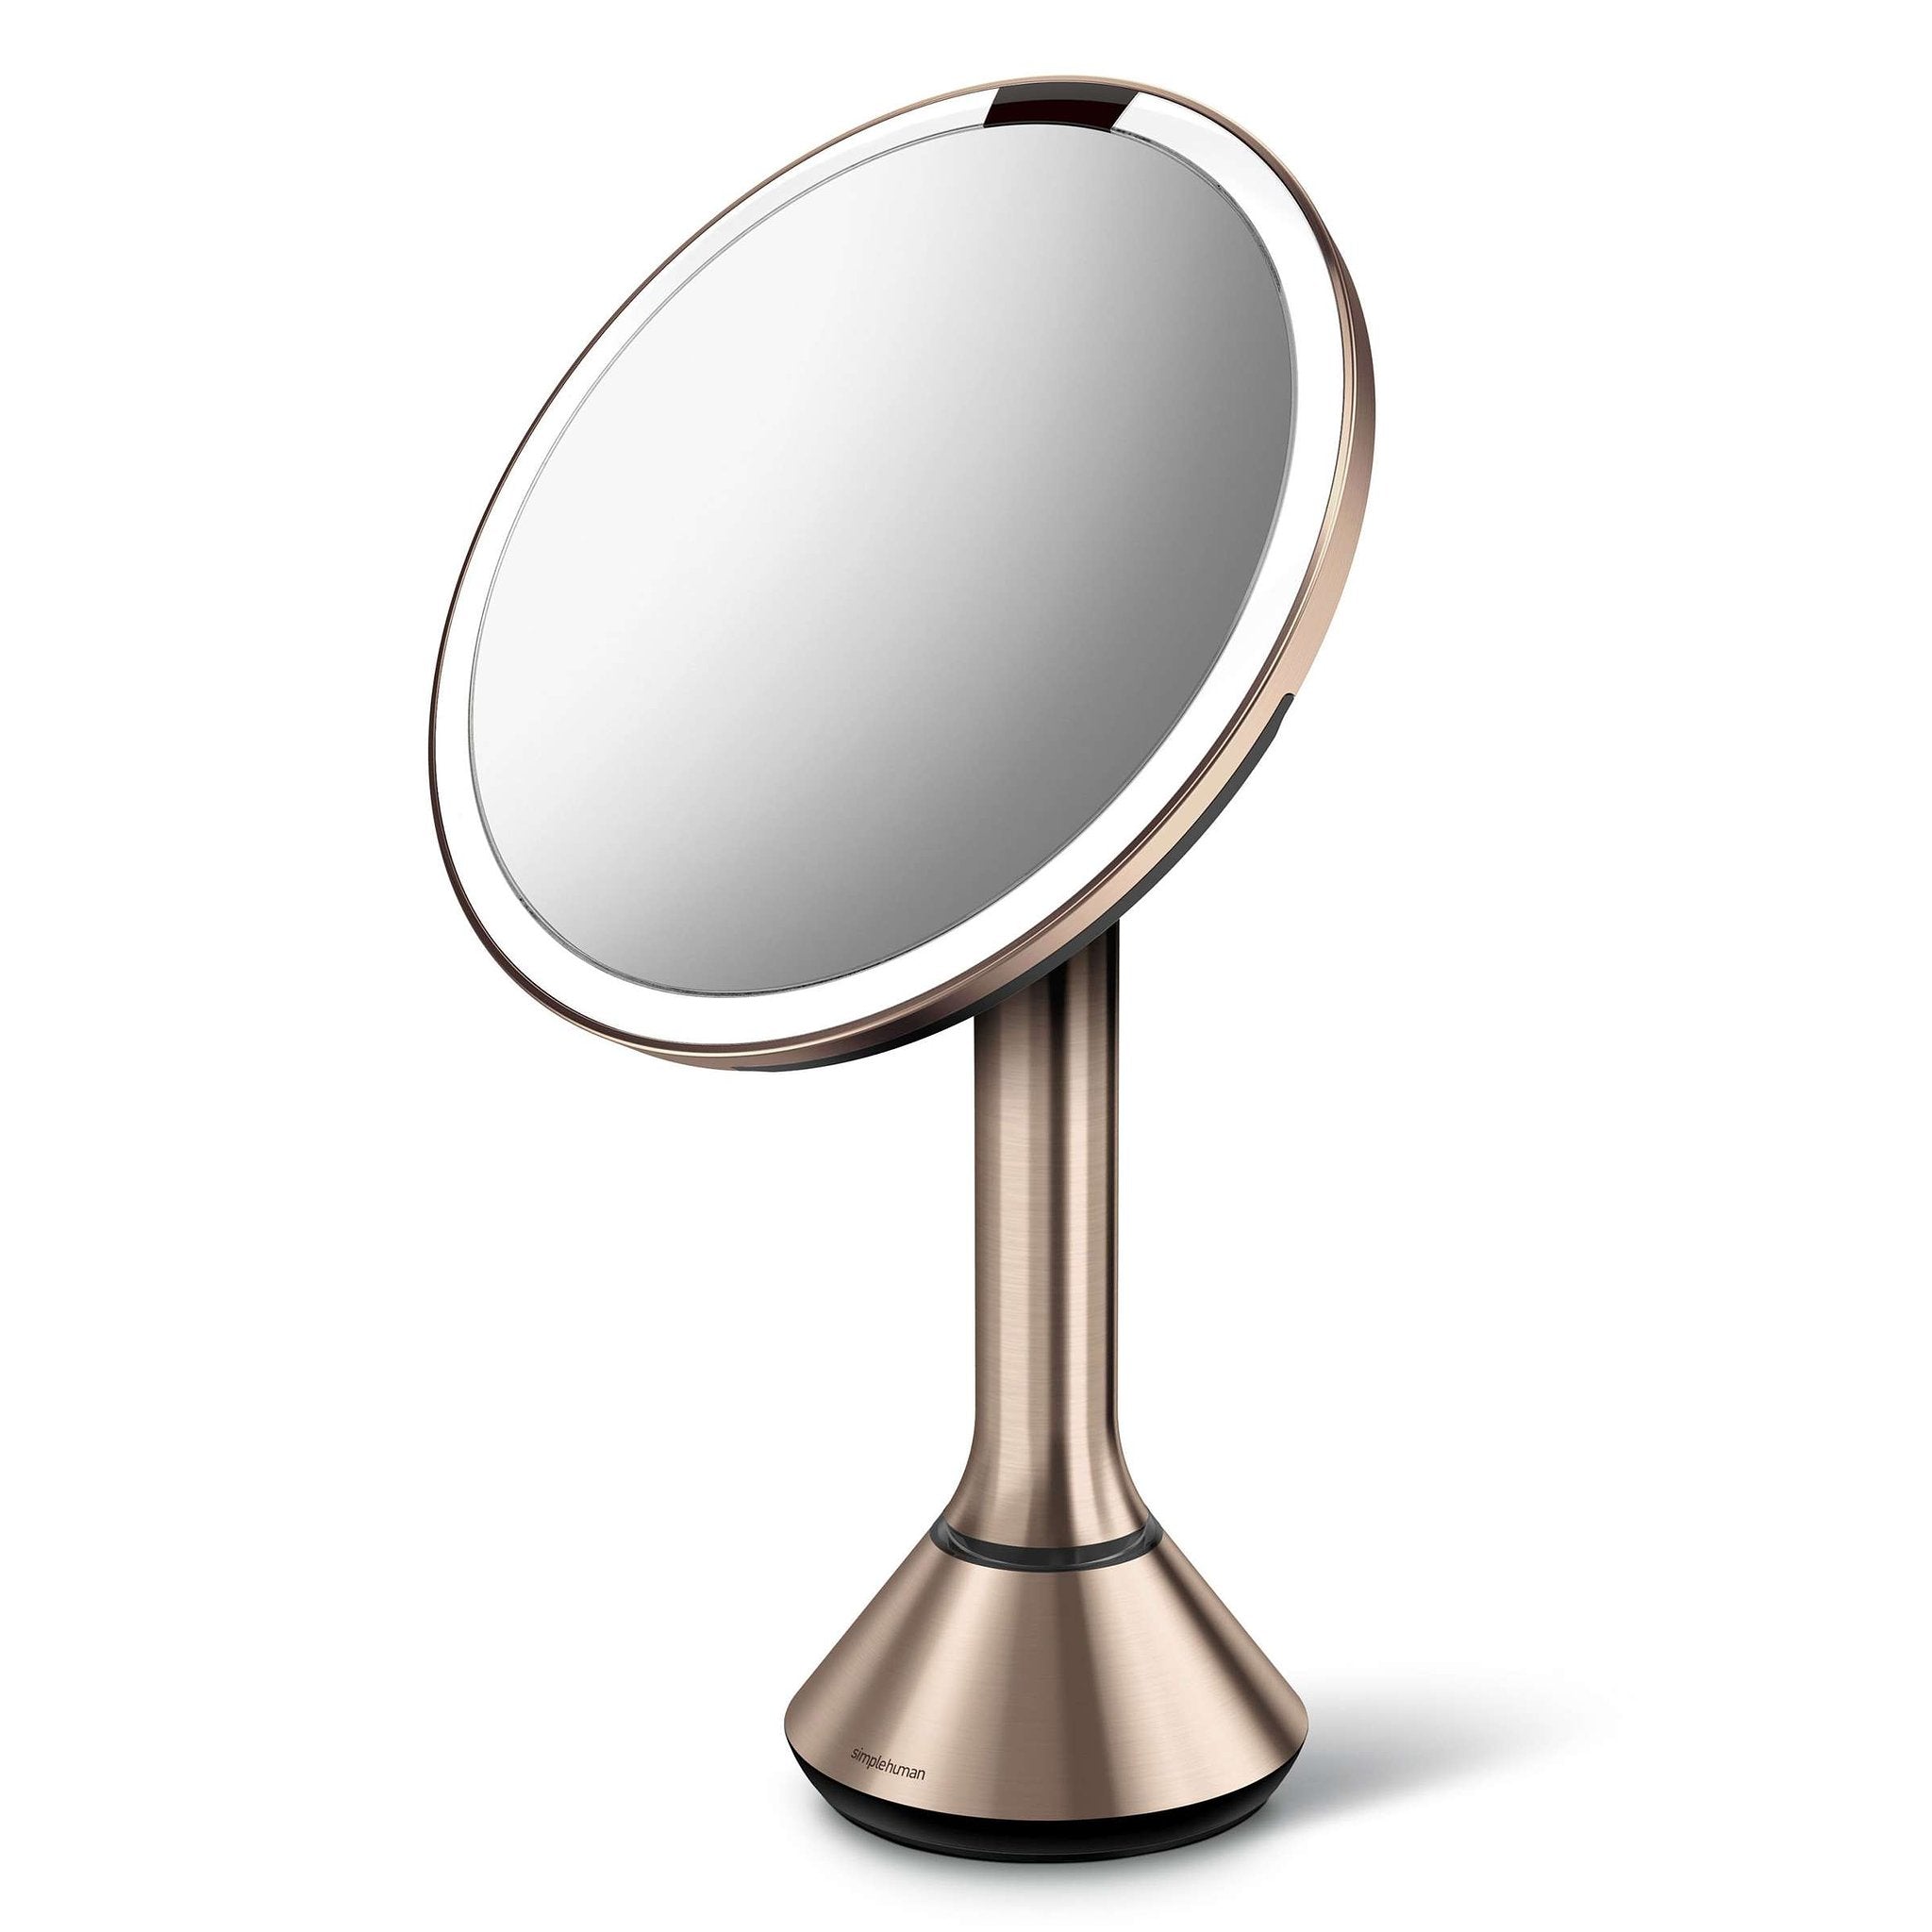 Simplehuman Mirror with Sensor Manual Brightness Control and Dual Light Settings Rose Gold